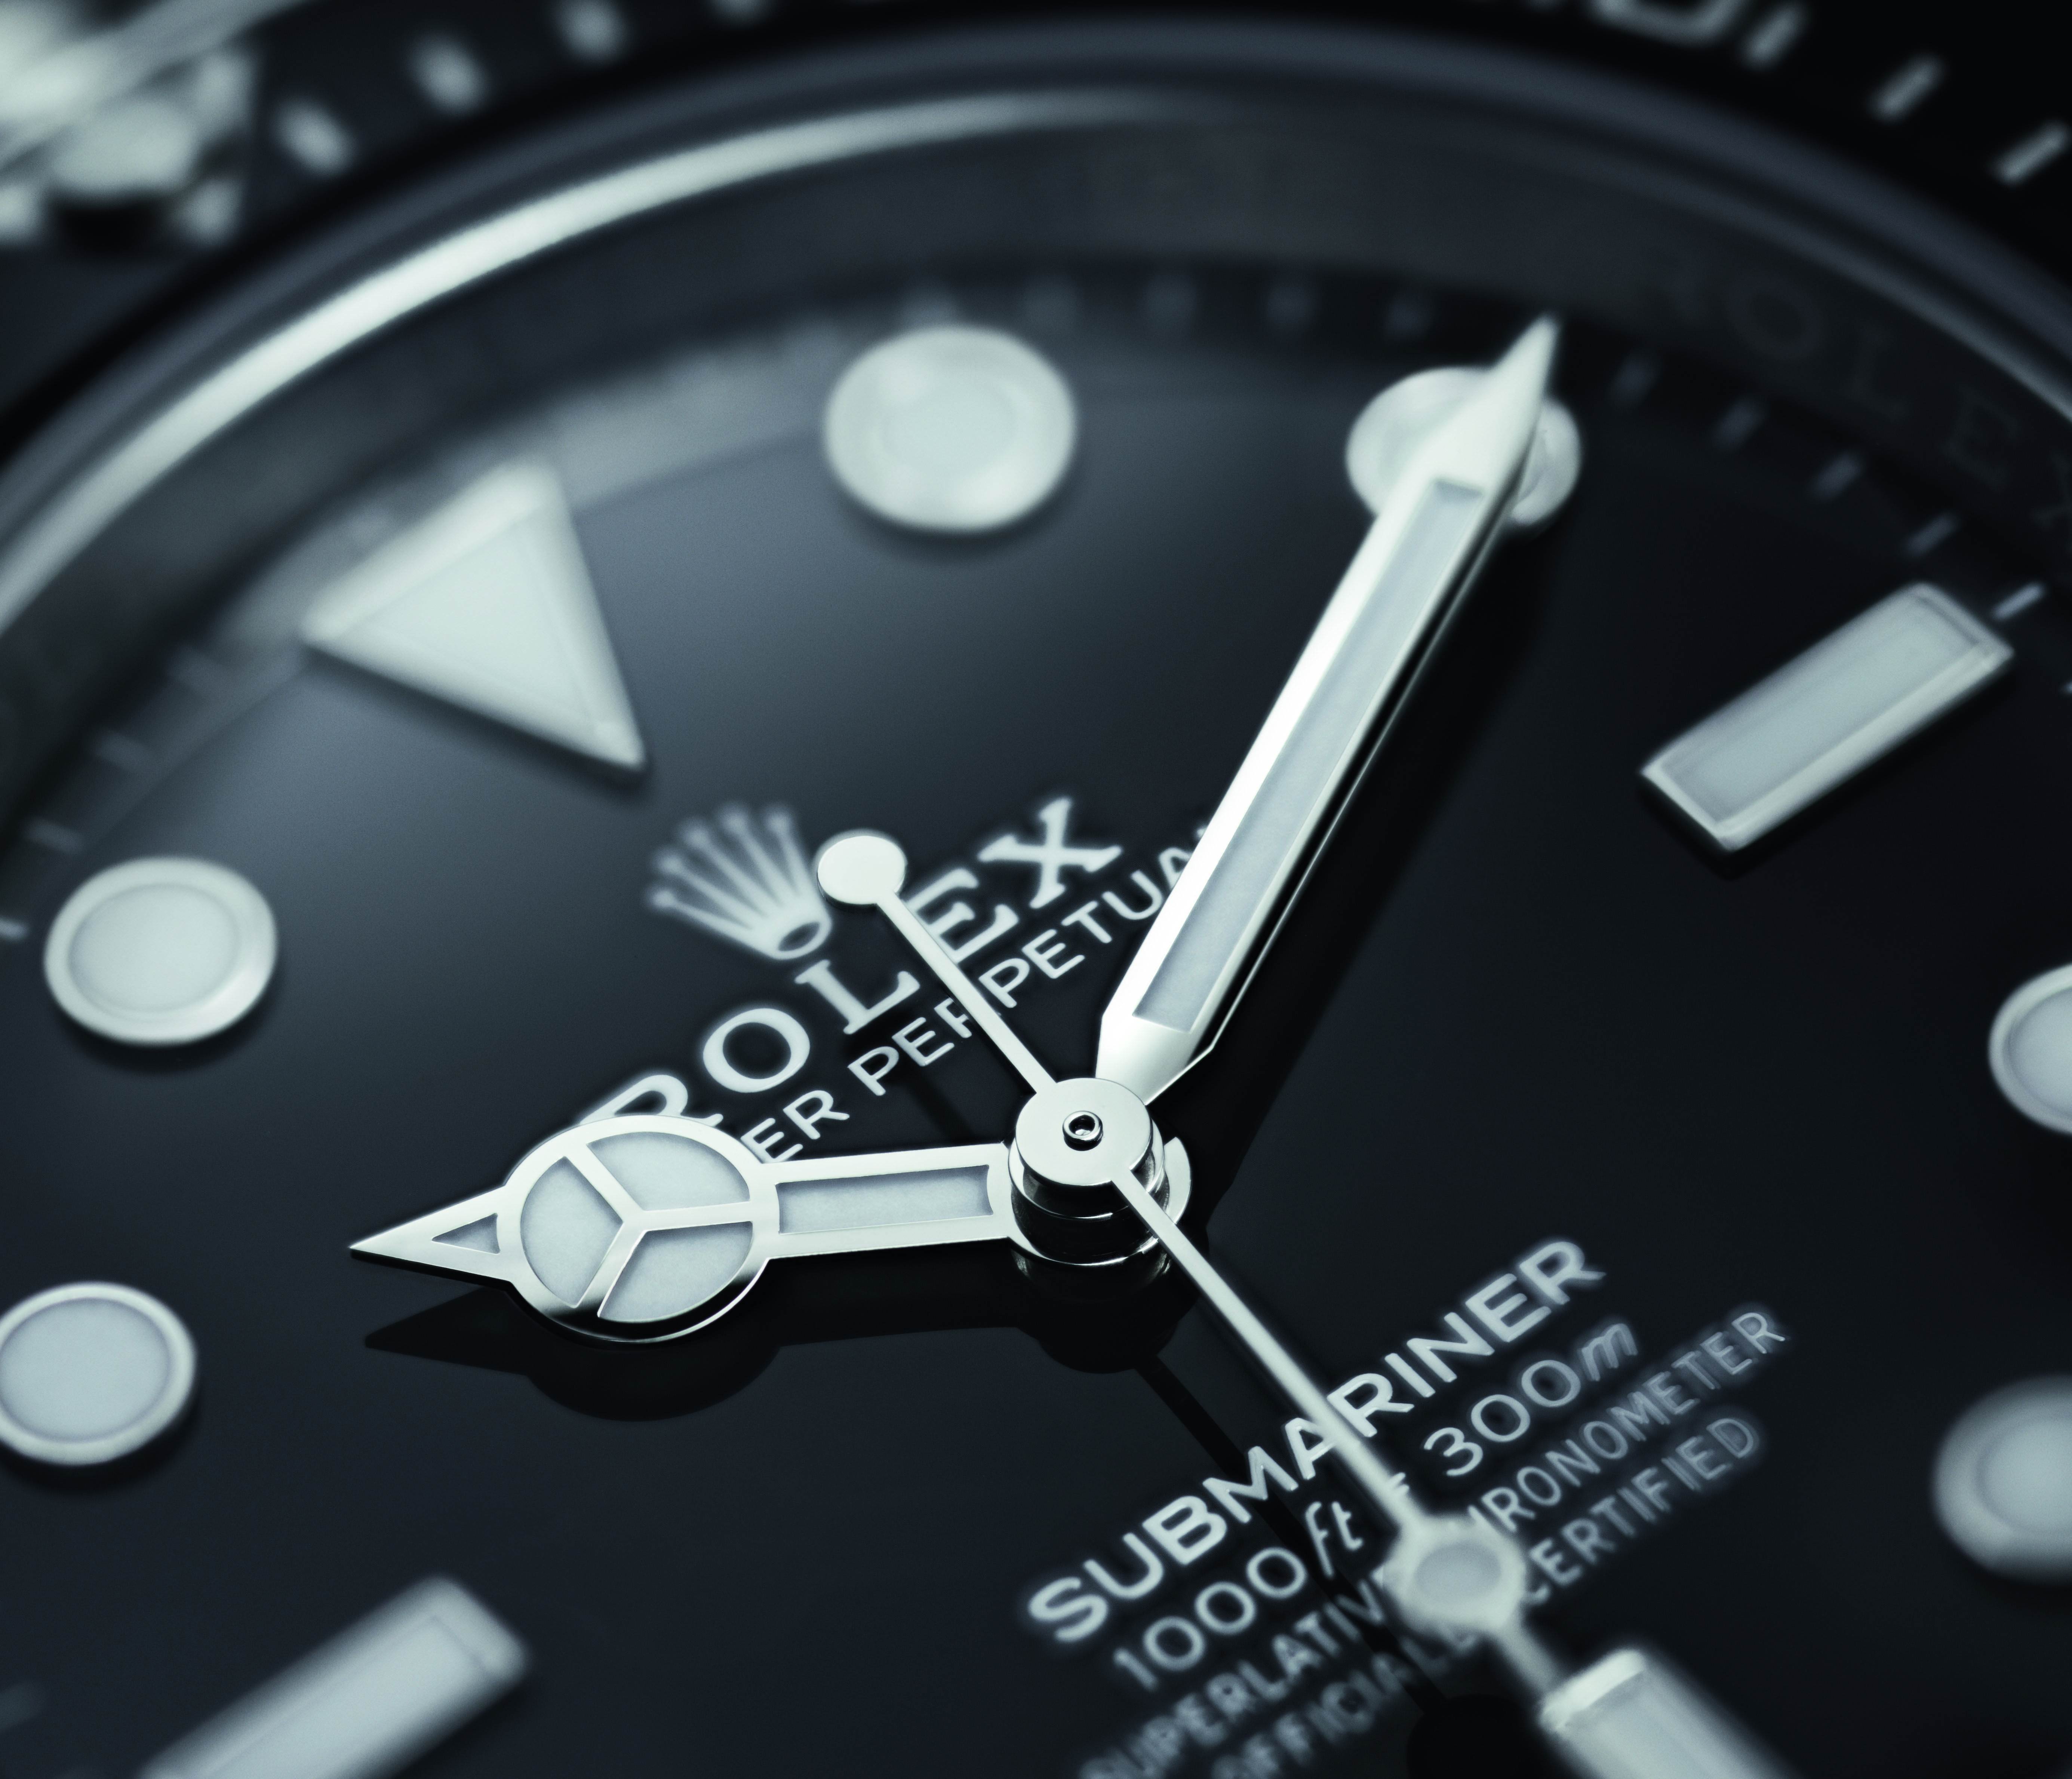 The 2020 Rolex Submariner: Details 